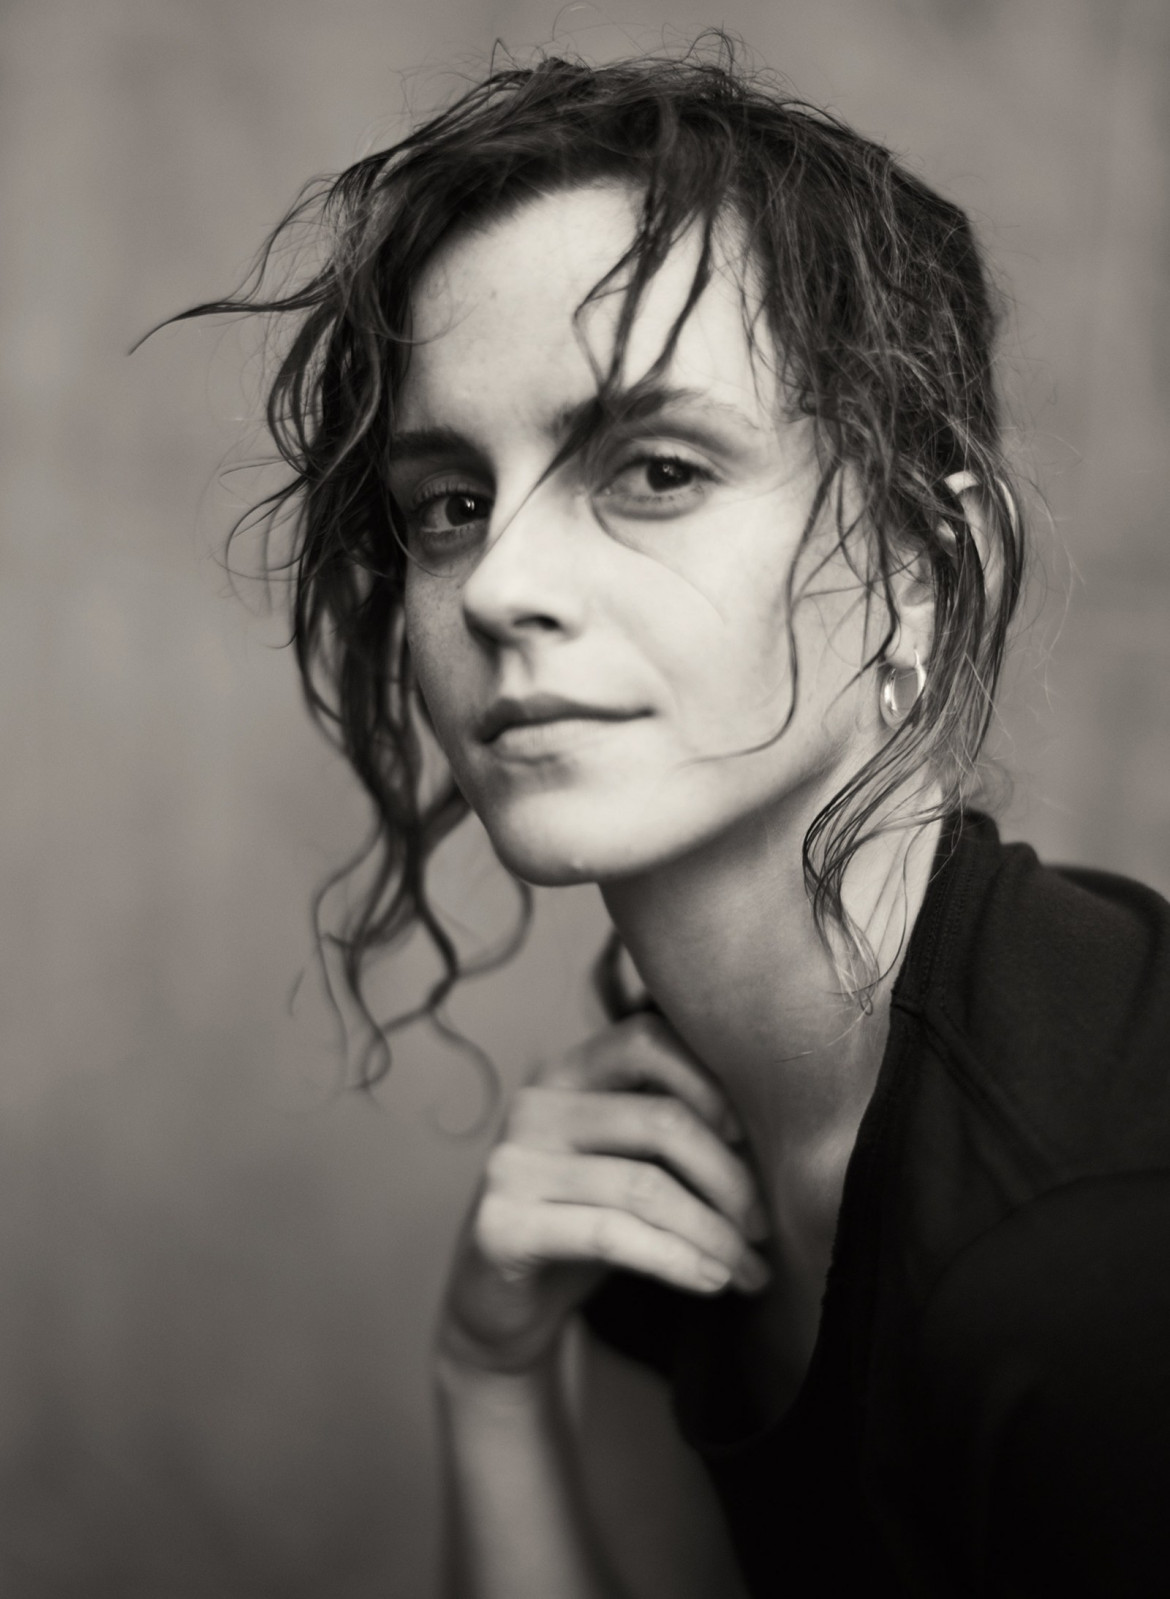 Emma Watson, fot. Paolo Roversi / Kalendarz Pirelli 2020